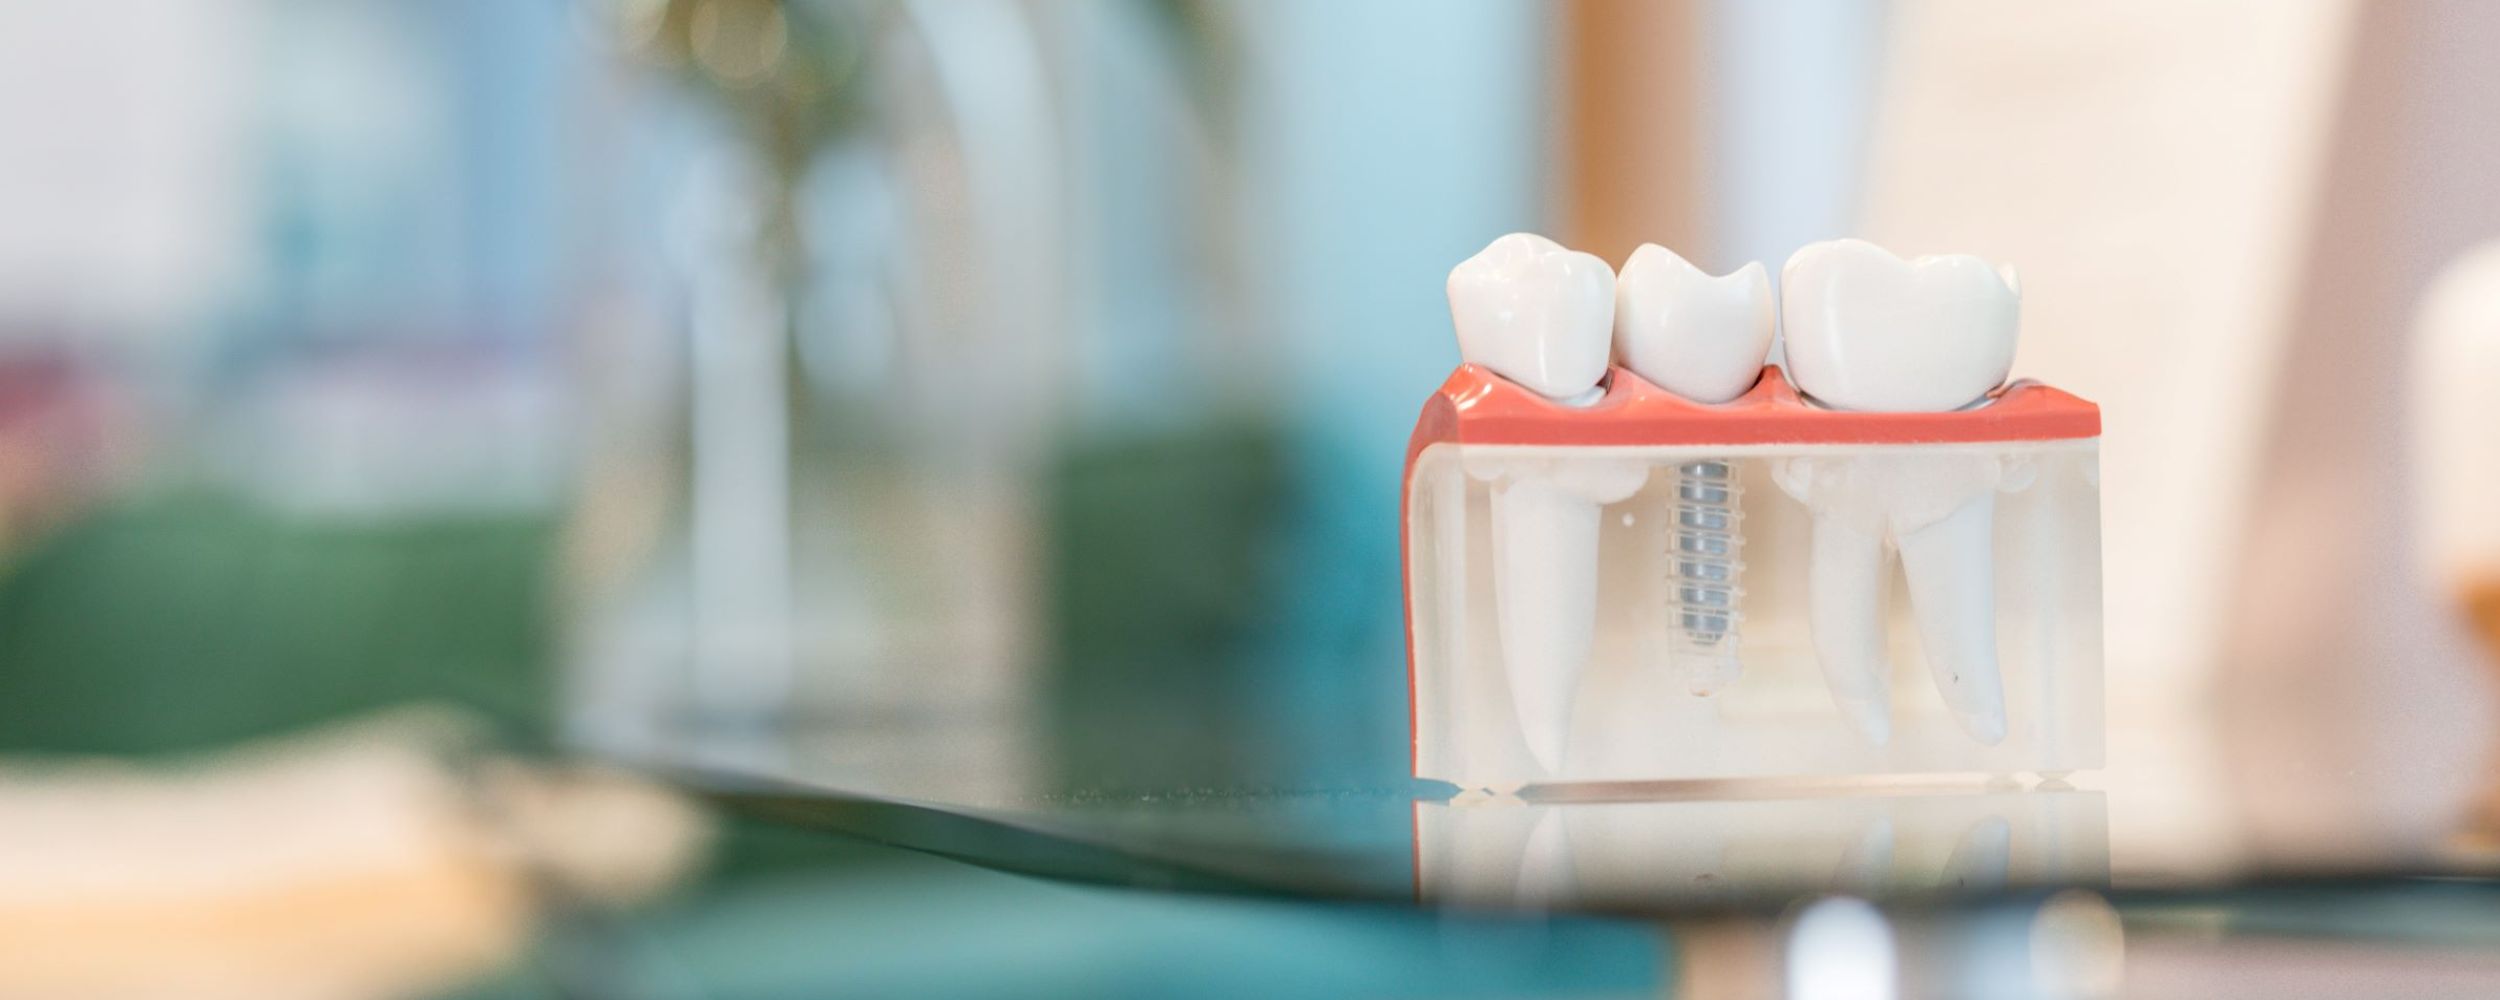 Single tooth dental implants